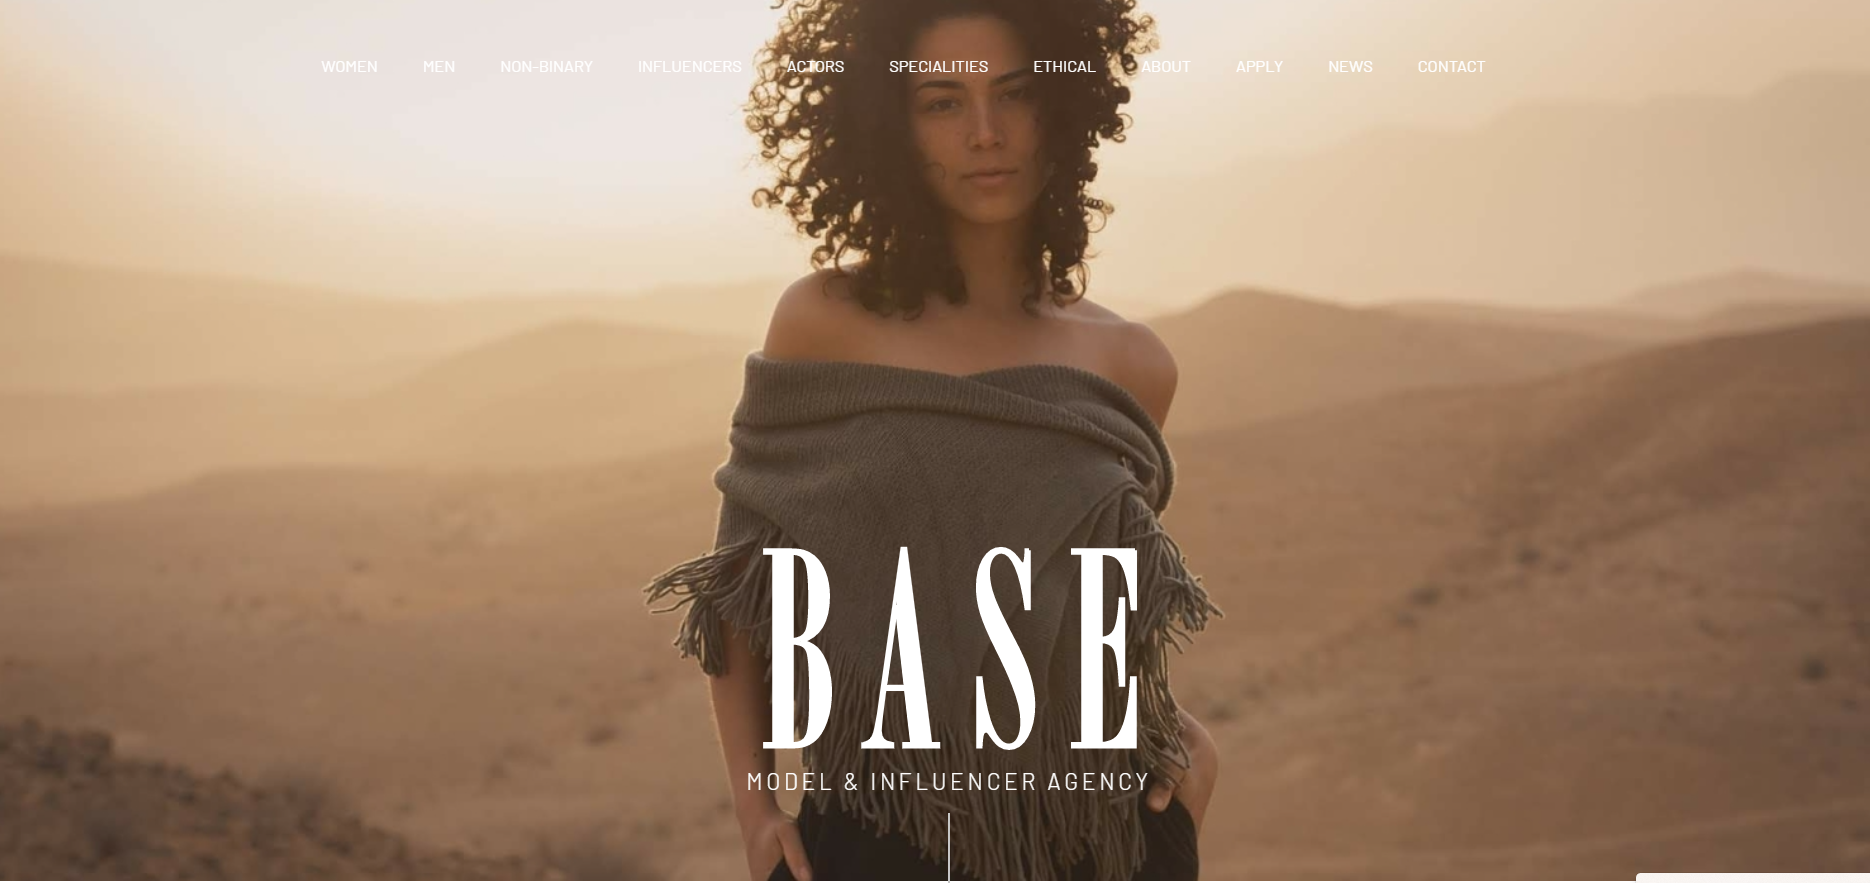 Base Model & Influencer Agency